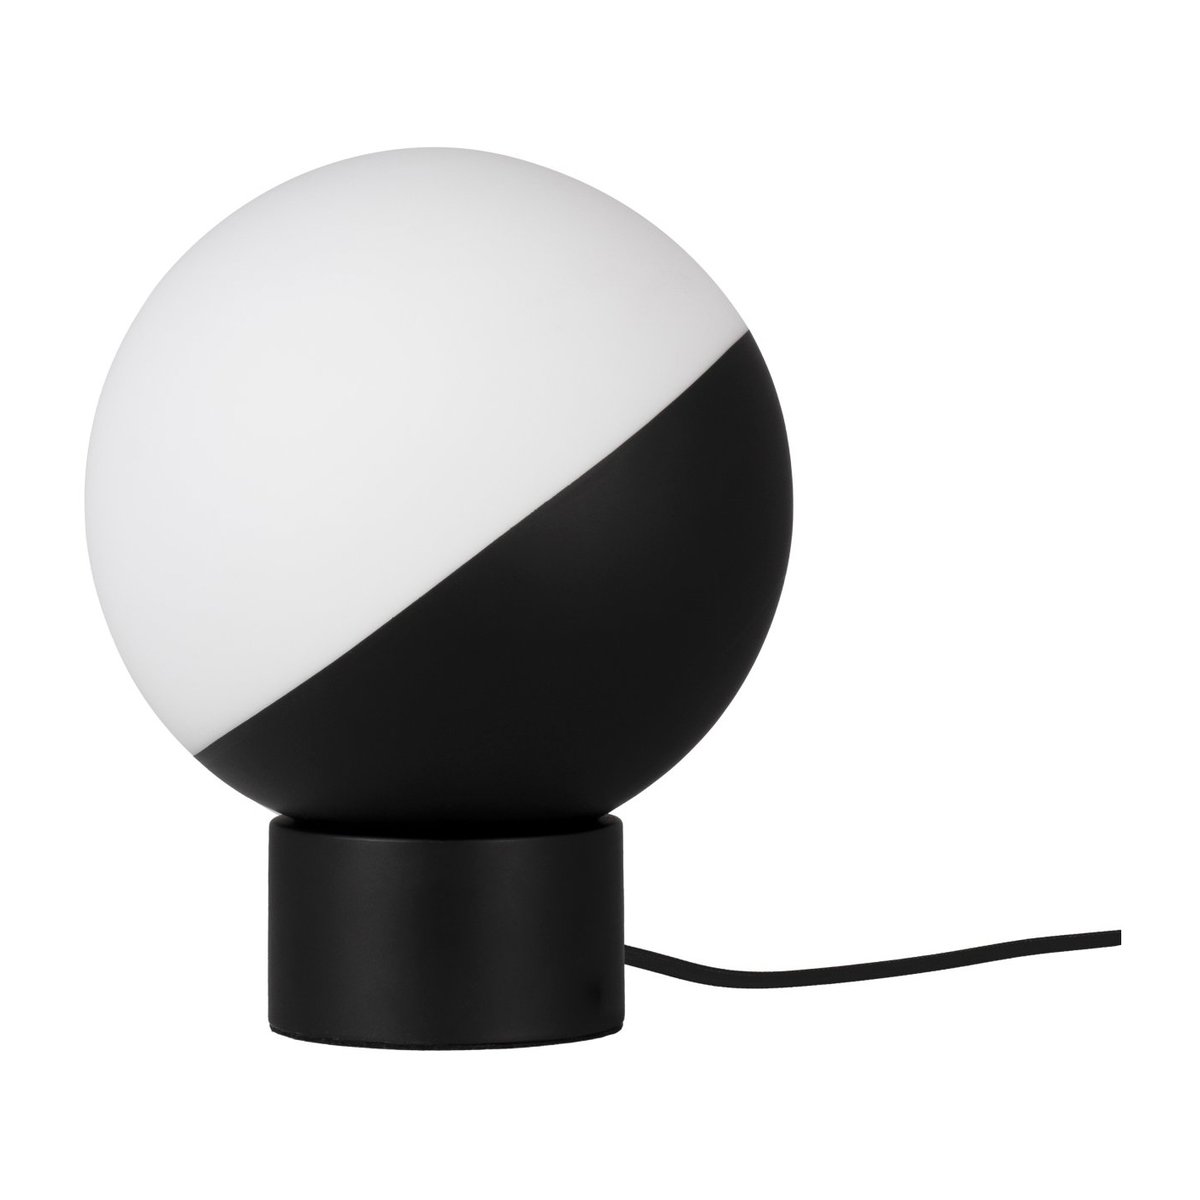 Globen Lighting Contur pöytävalaisin Ø 20 cm Musta-valkoinen